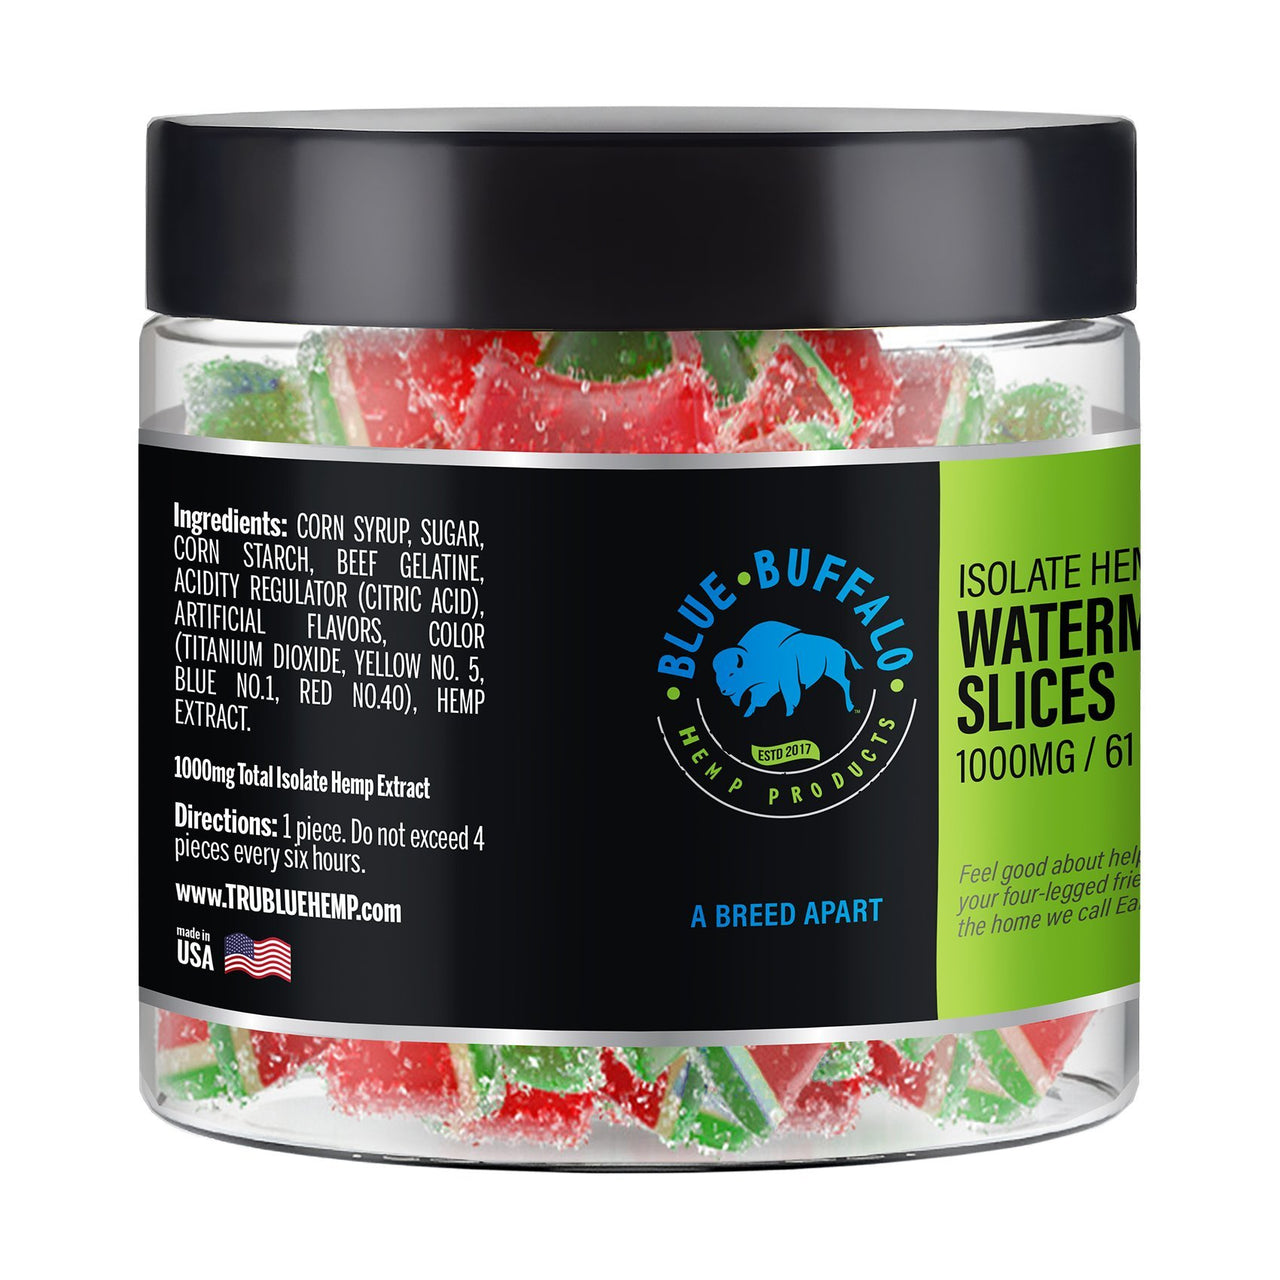 Full Spectrum CBD Gummies:  Watermelon Slices 1000mg | 60ct